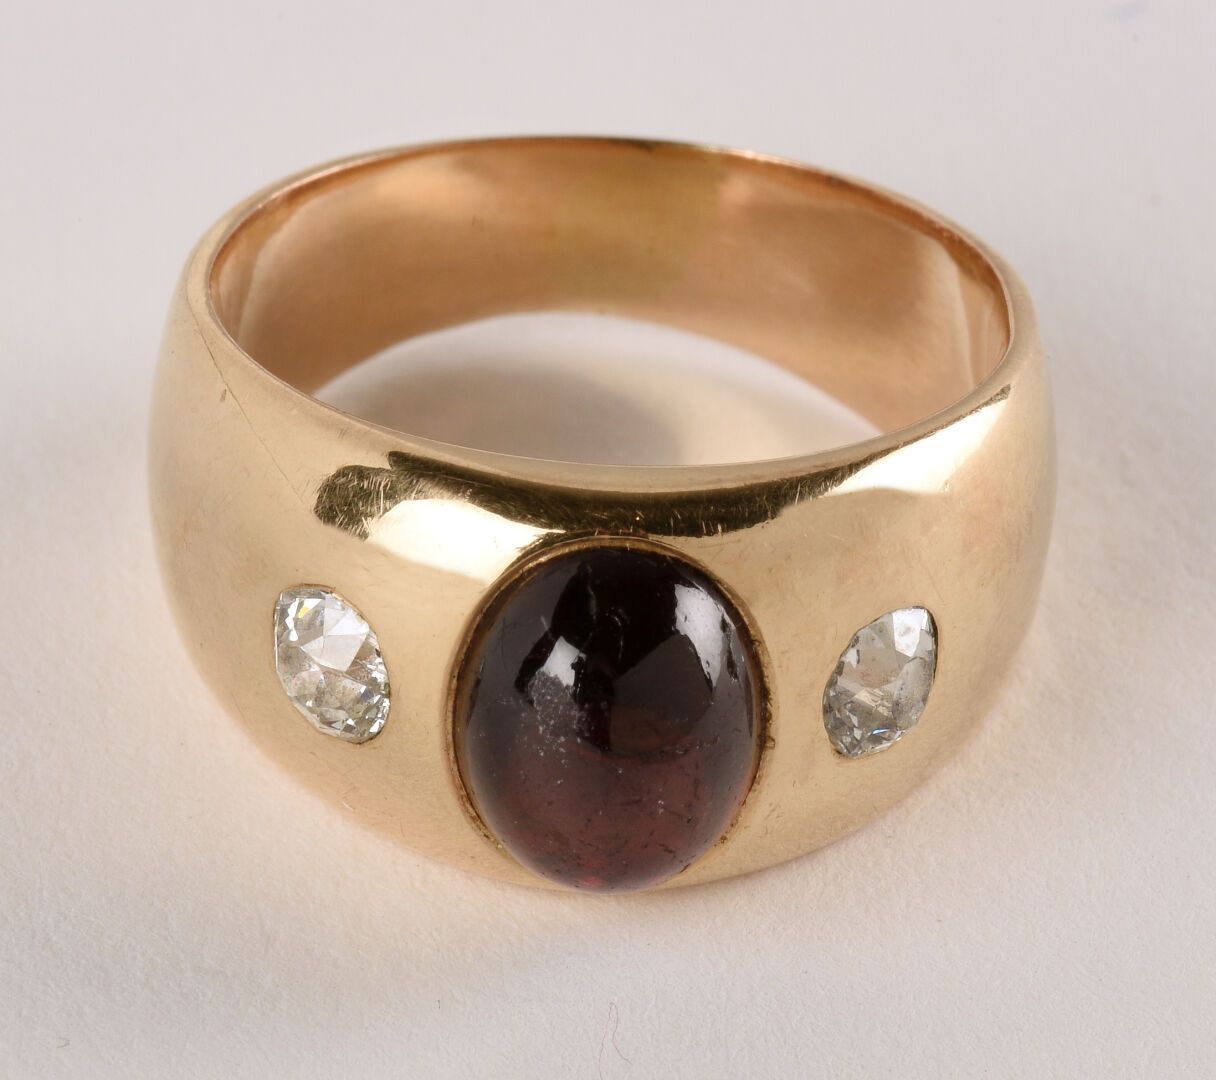 Null 黄金戒指18K（750千分之一），装饰有凸圆形切割的石榴石，由两颗老式钻石支撑。转指：58。

P.毛重：11.9克。